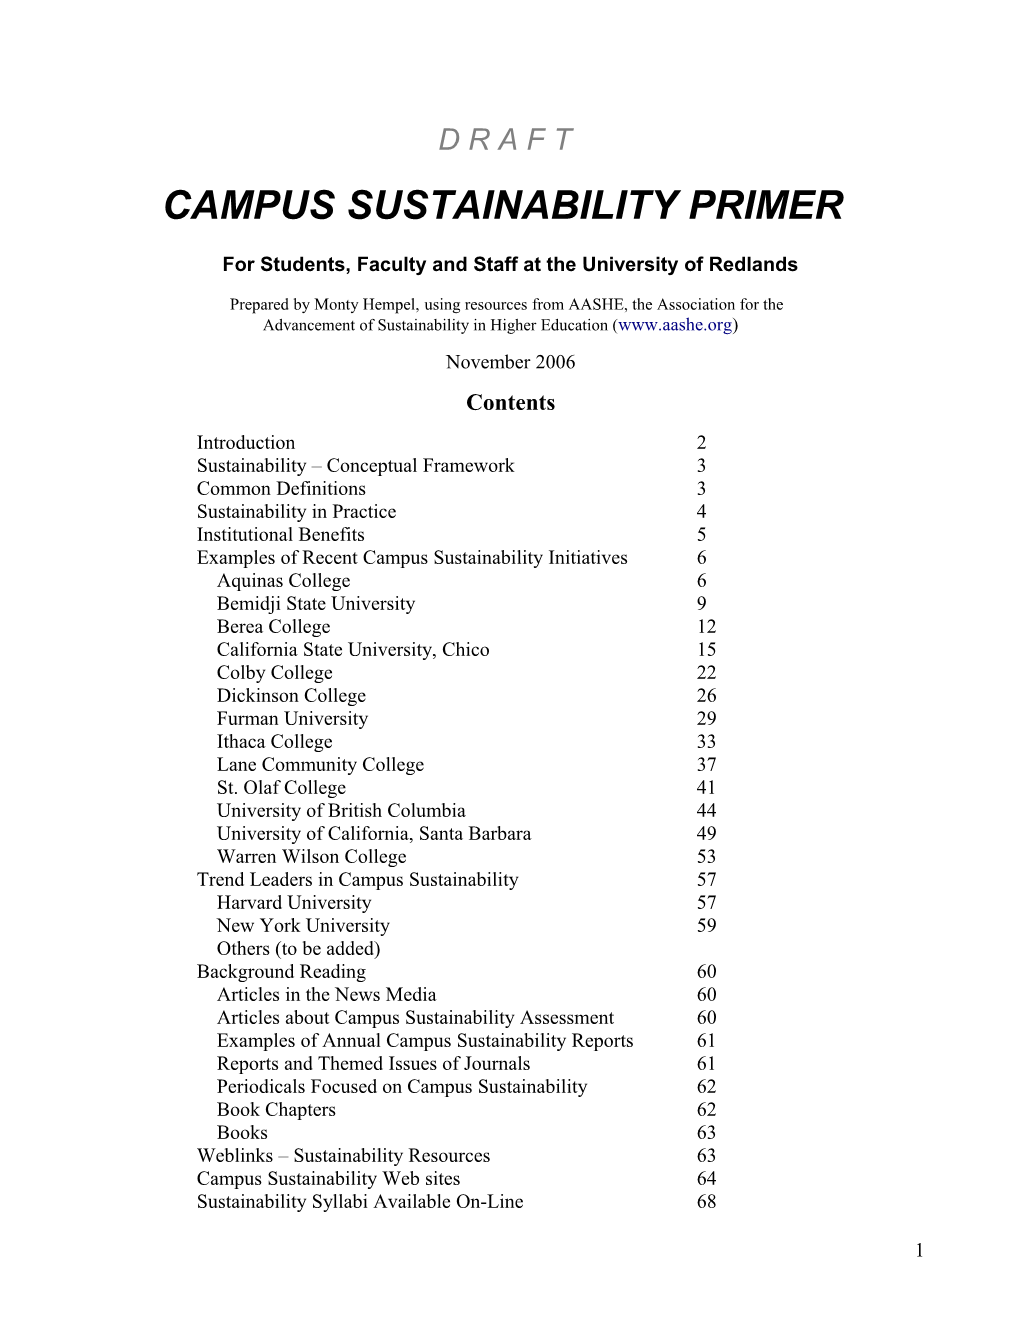 Campus Sustainability Initiatives